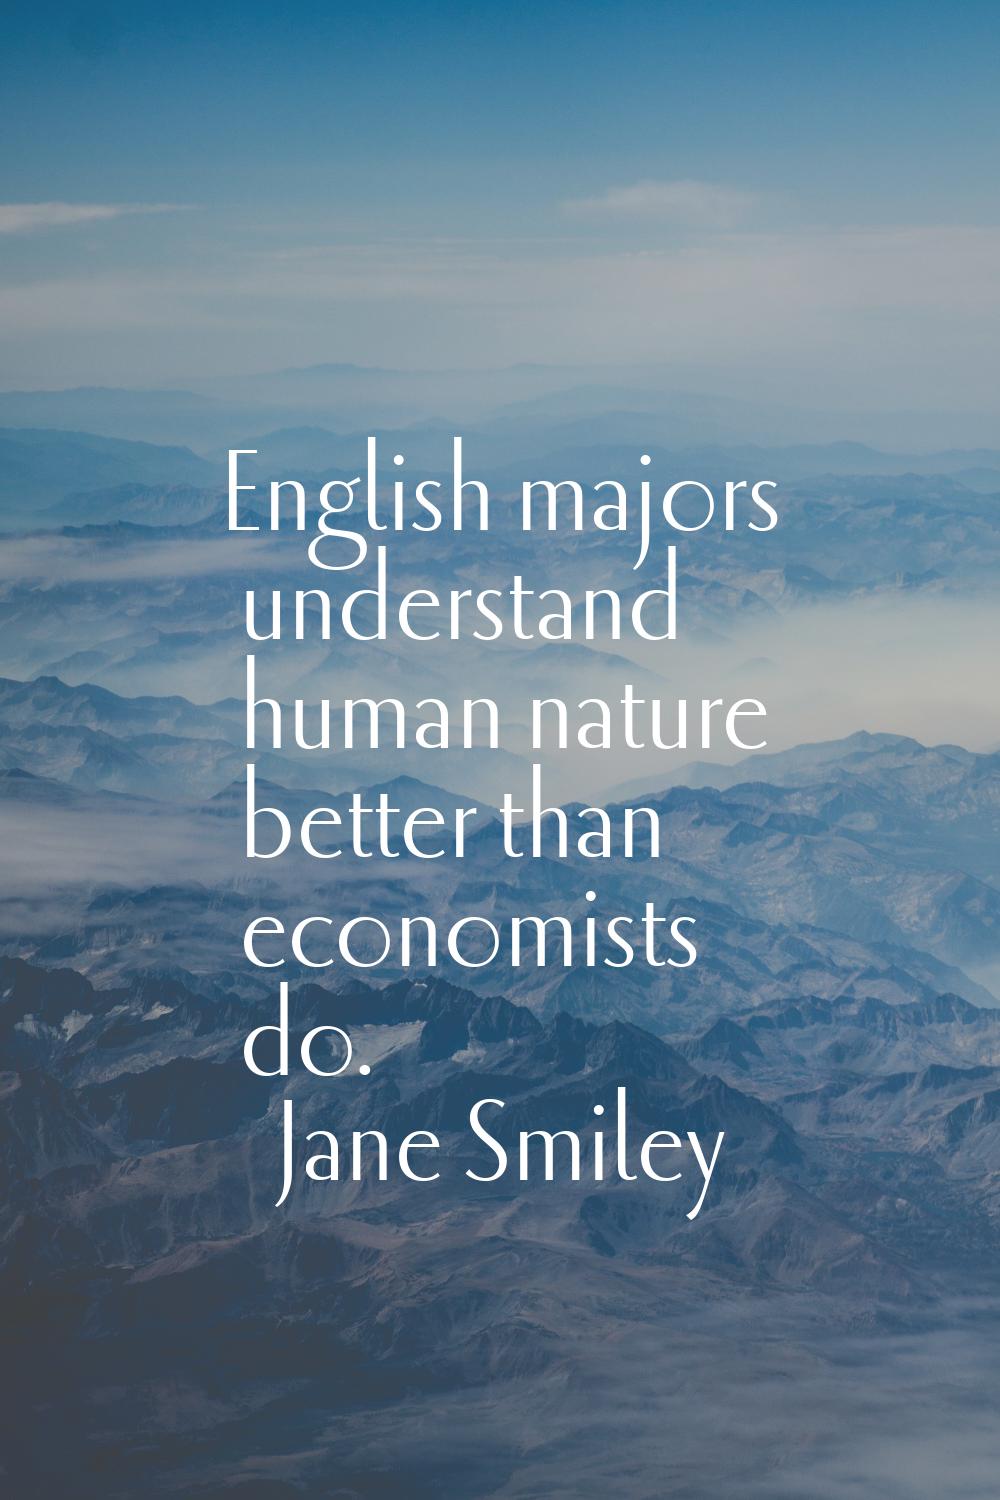 English majors understand human nature better than economists do.